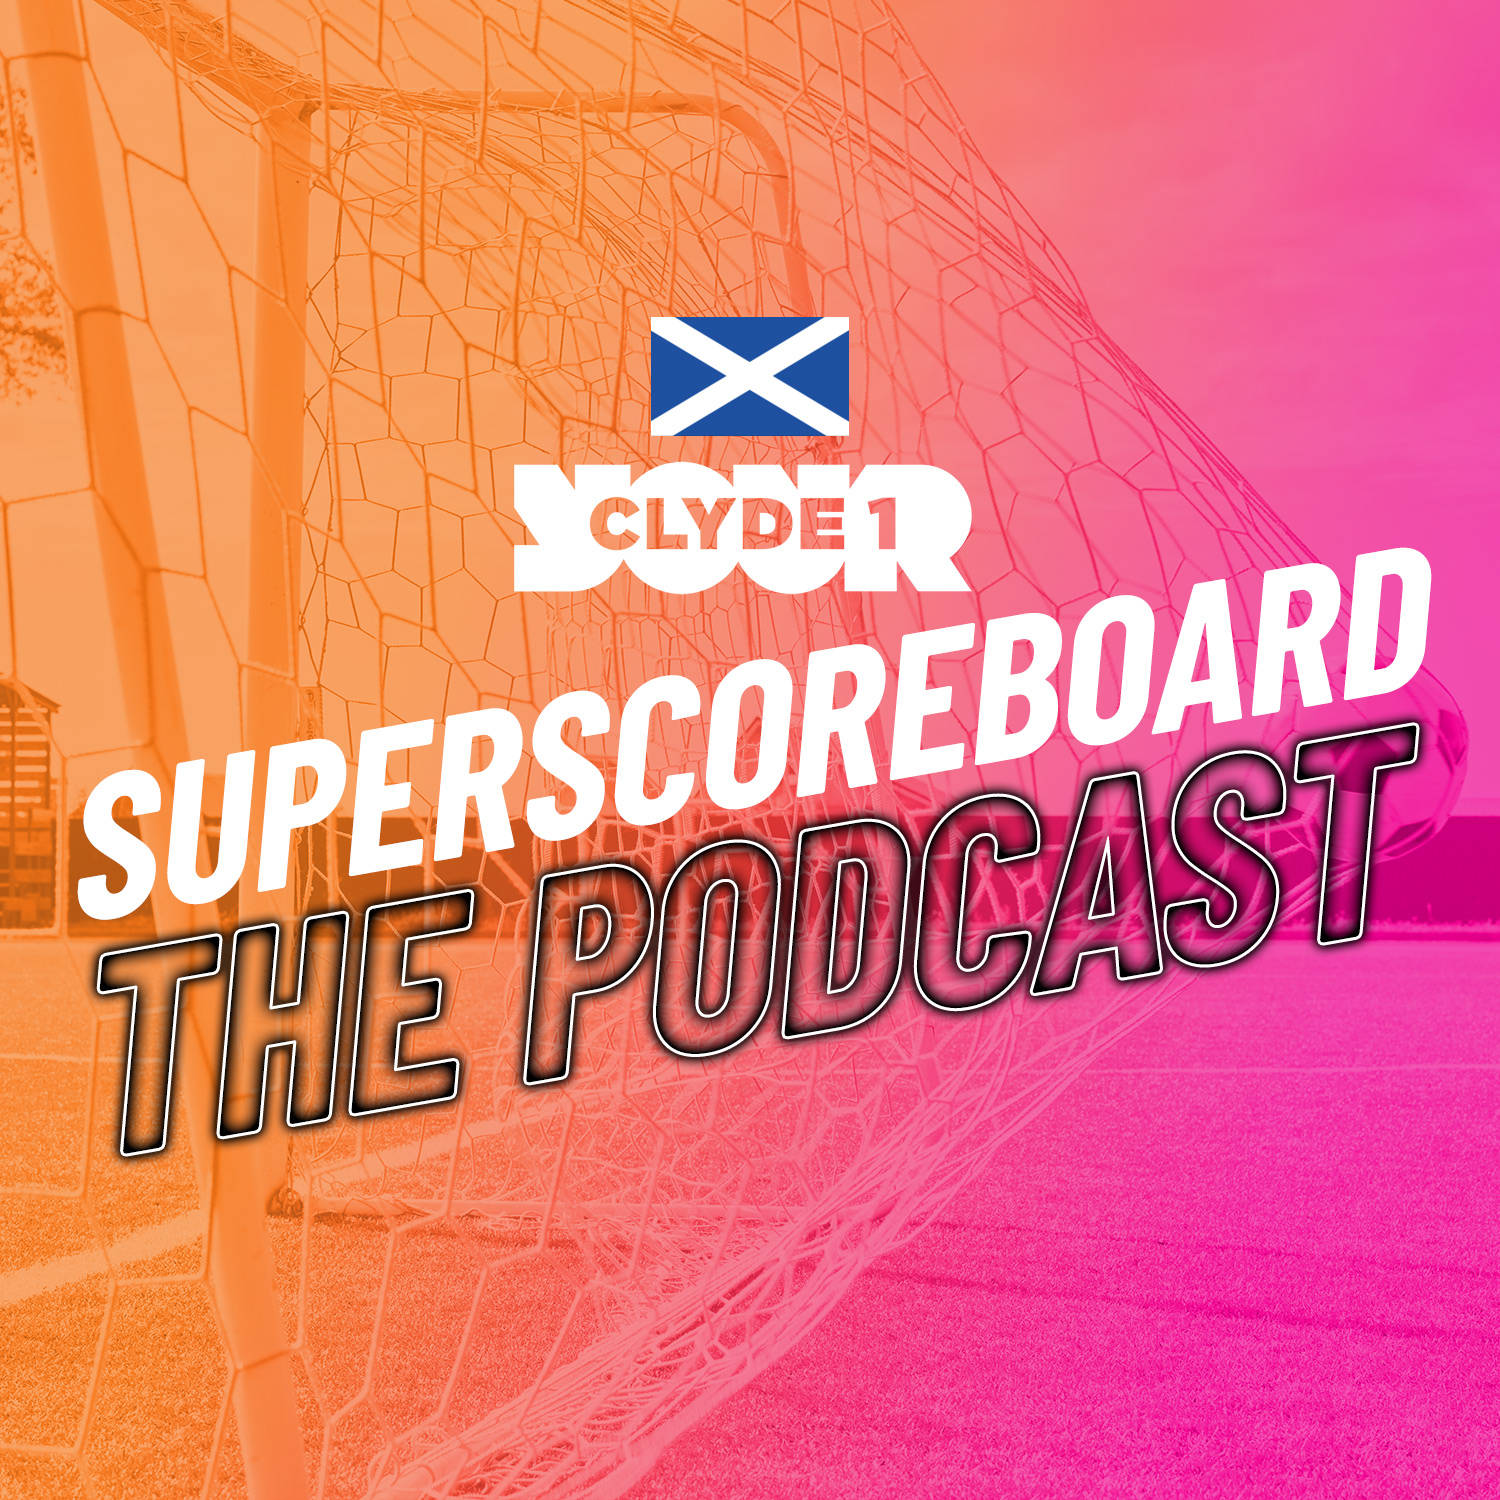 Thursday 25th April Clyde 1 Superscoreboard